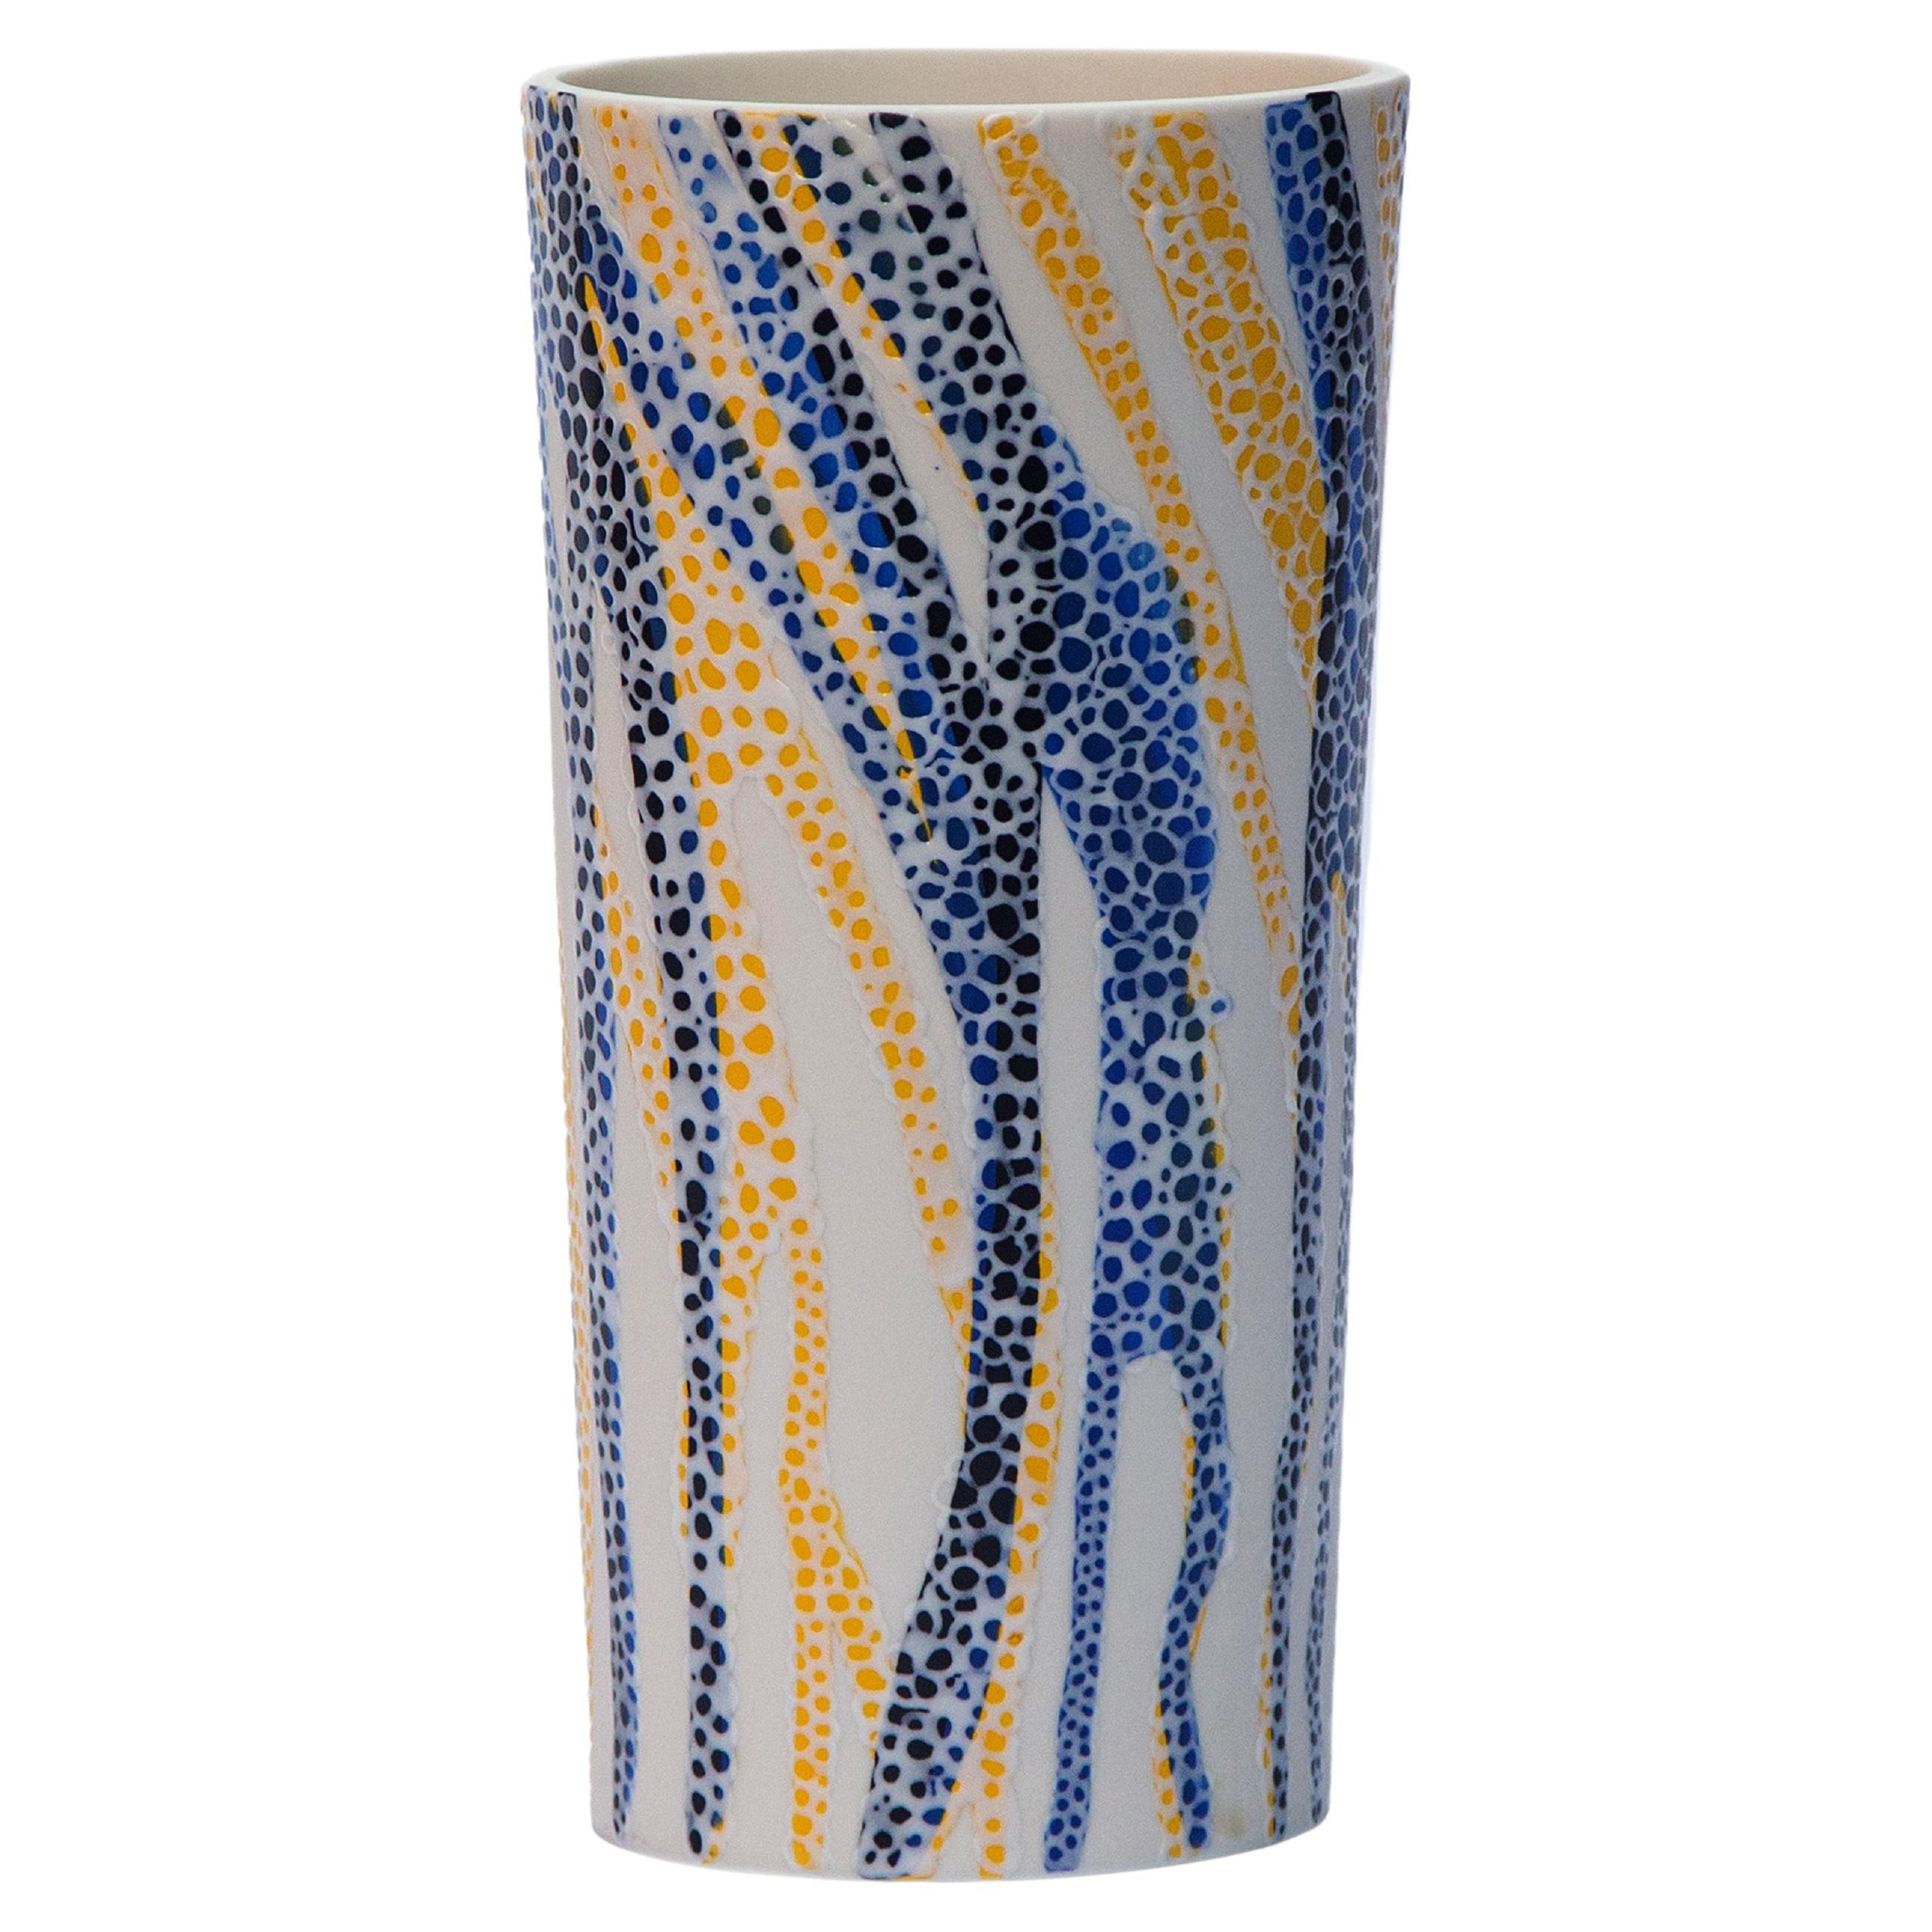 Porcelain Vase by Eugenio Michelini Unique Parianware Contemporary 21st Century